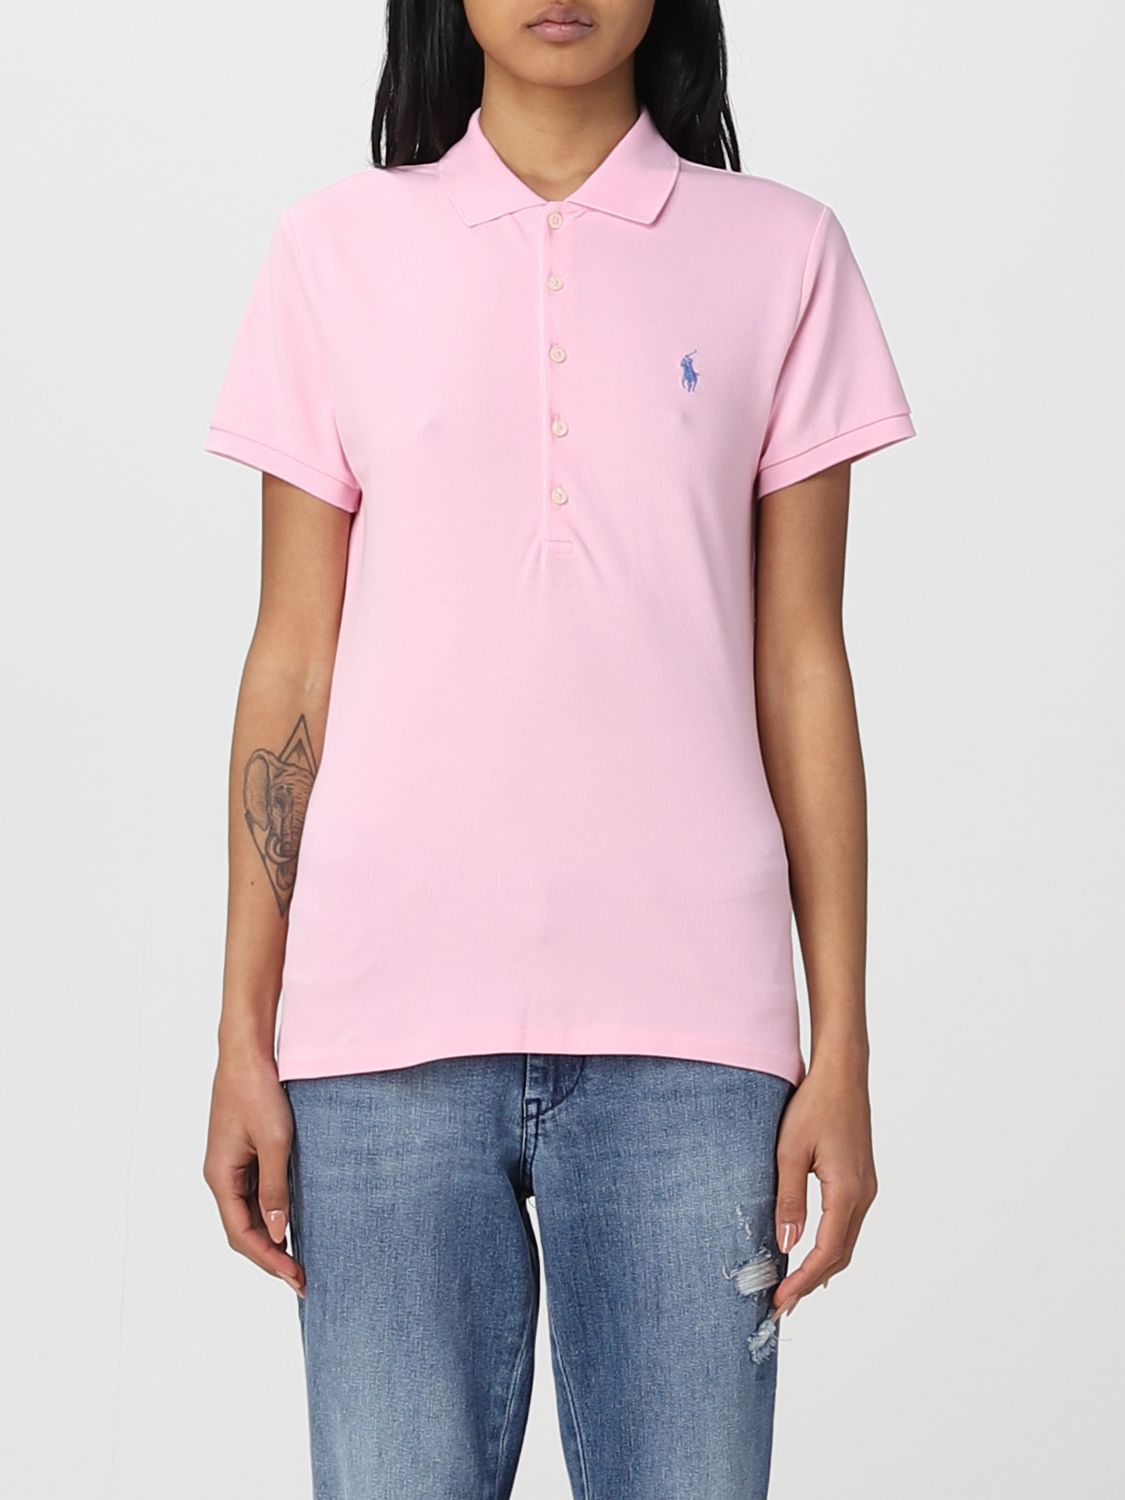 POLO RALPH LAUREN: polo shirt for woman - Baby Pink | Polo Ralph Lauren ...